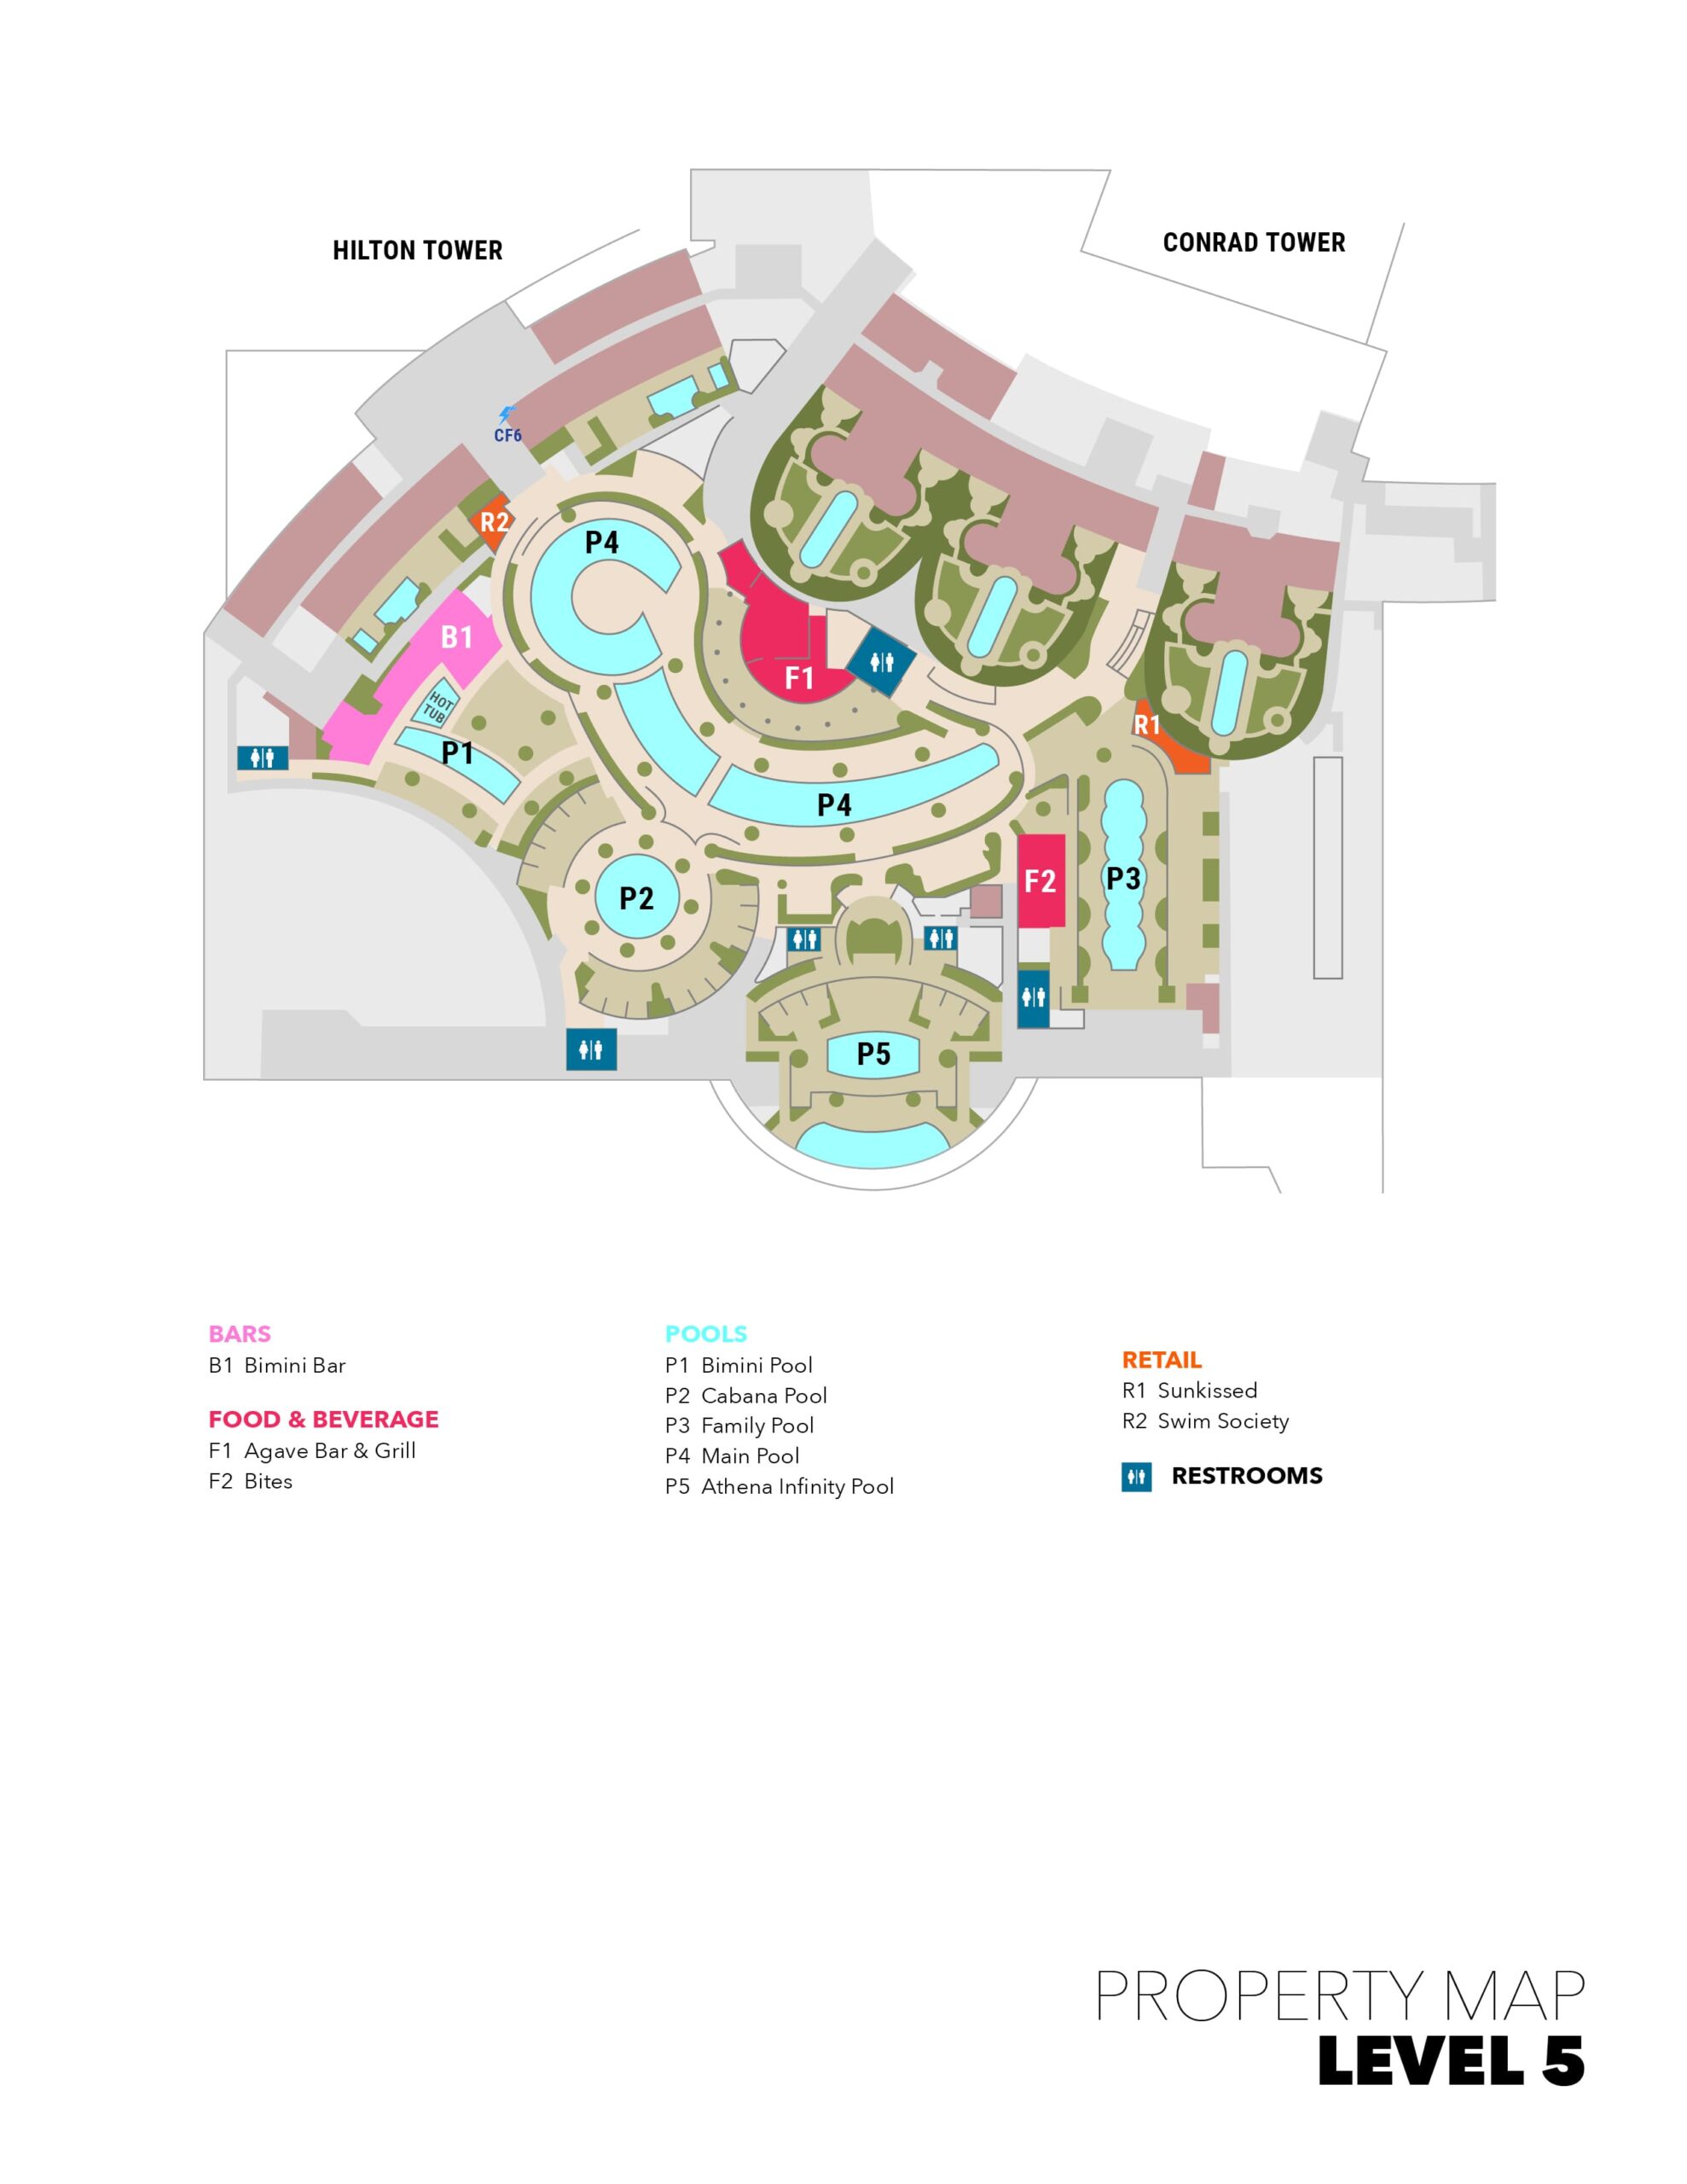 Map of J.W. Marriott Las Vegas Resort And Spa, Las Vegas